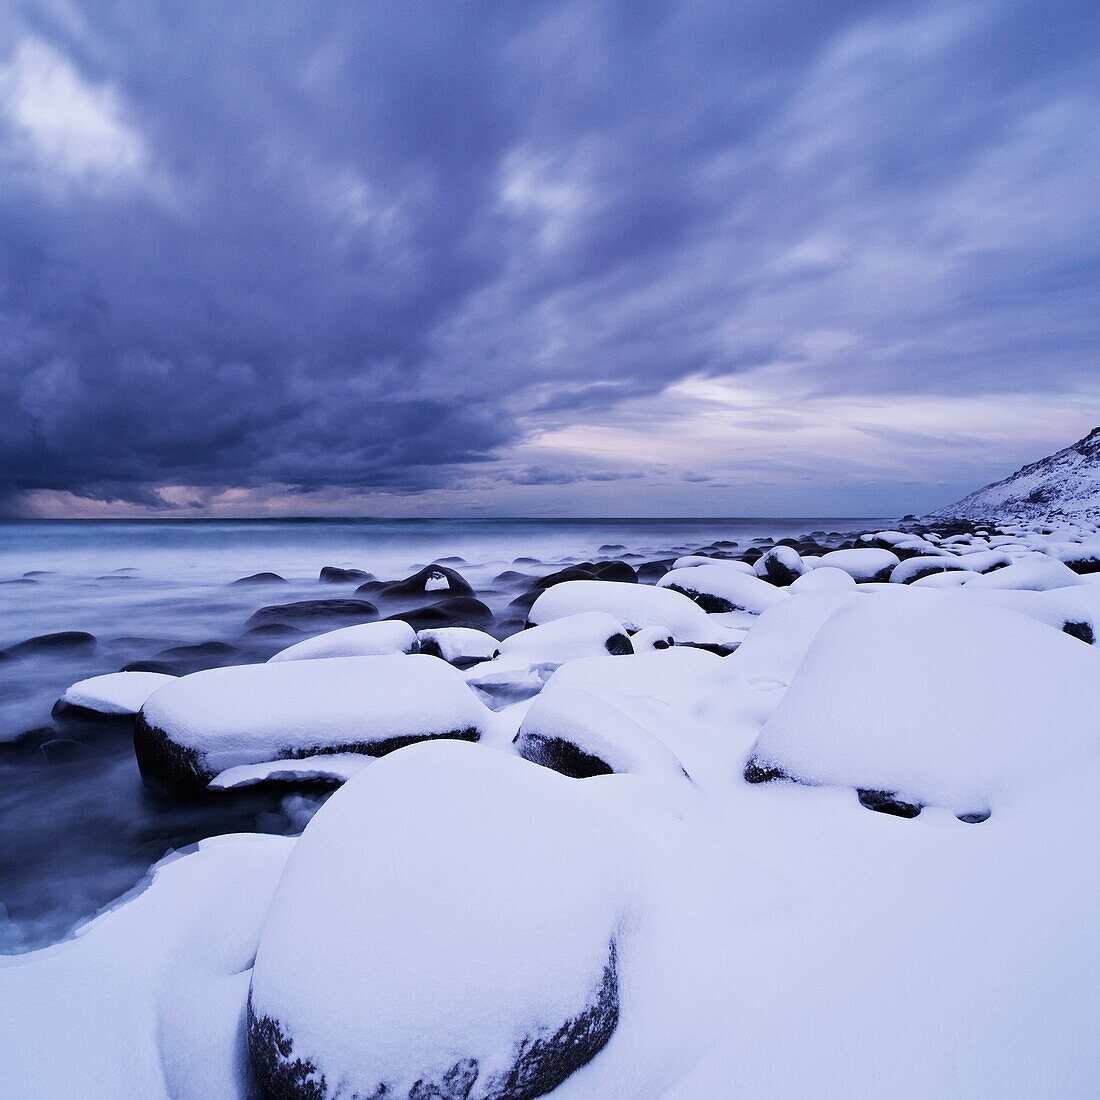 Snow covered rocks at Unstad beach, Vestvågøy, Lofoten islands, Norway